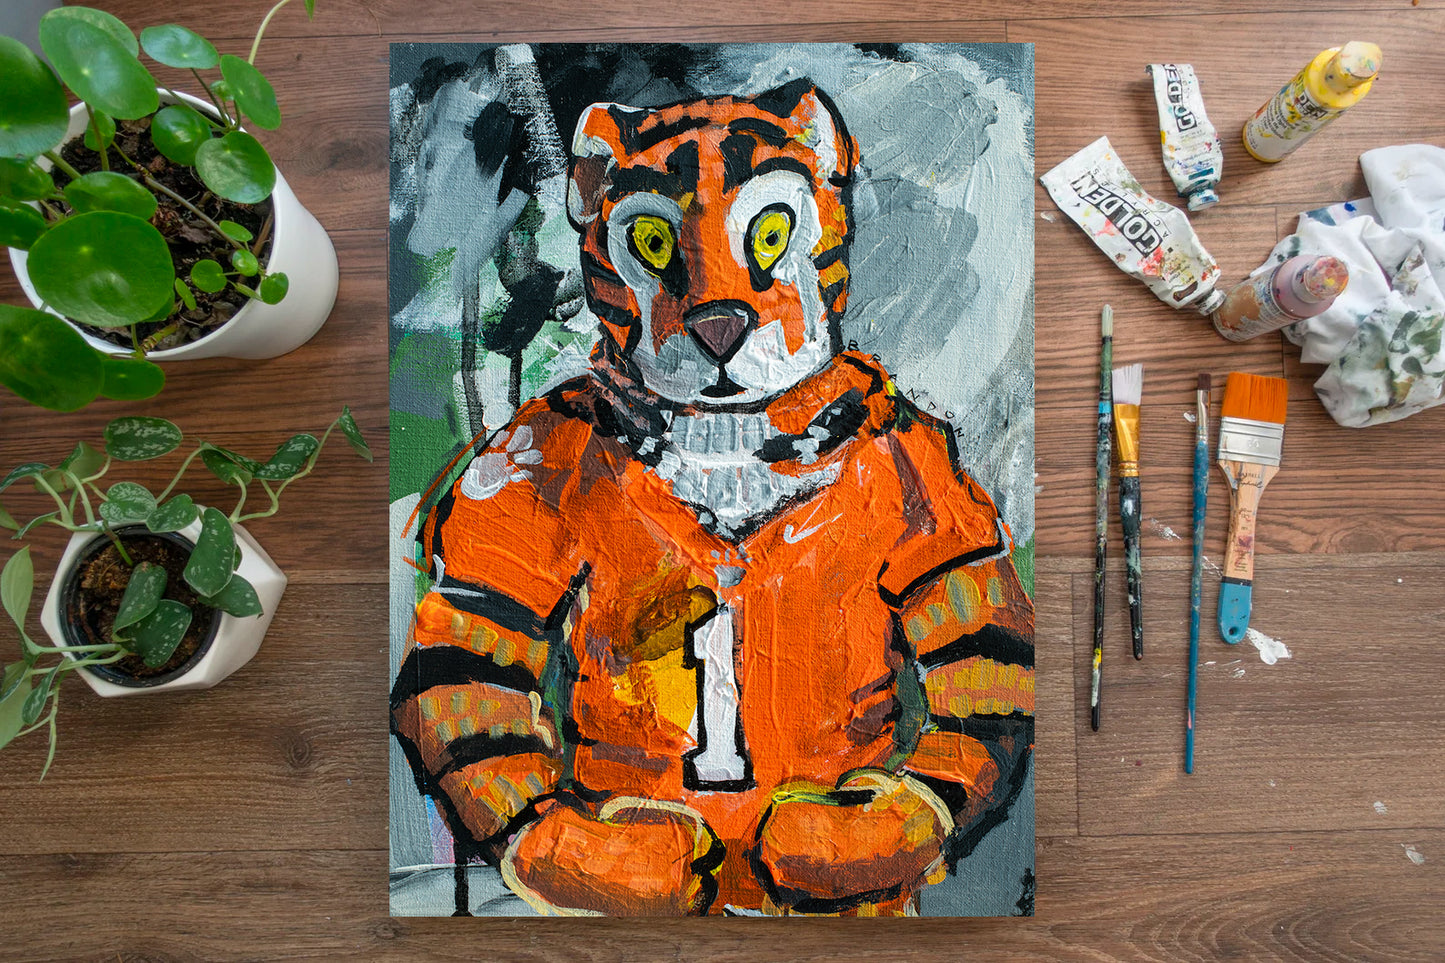 Clemson Tigers Mascot "The Tiger" Painting | Original Acrylic Painting on 12x16 Premium Canvas Panel